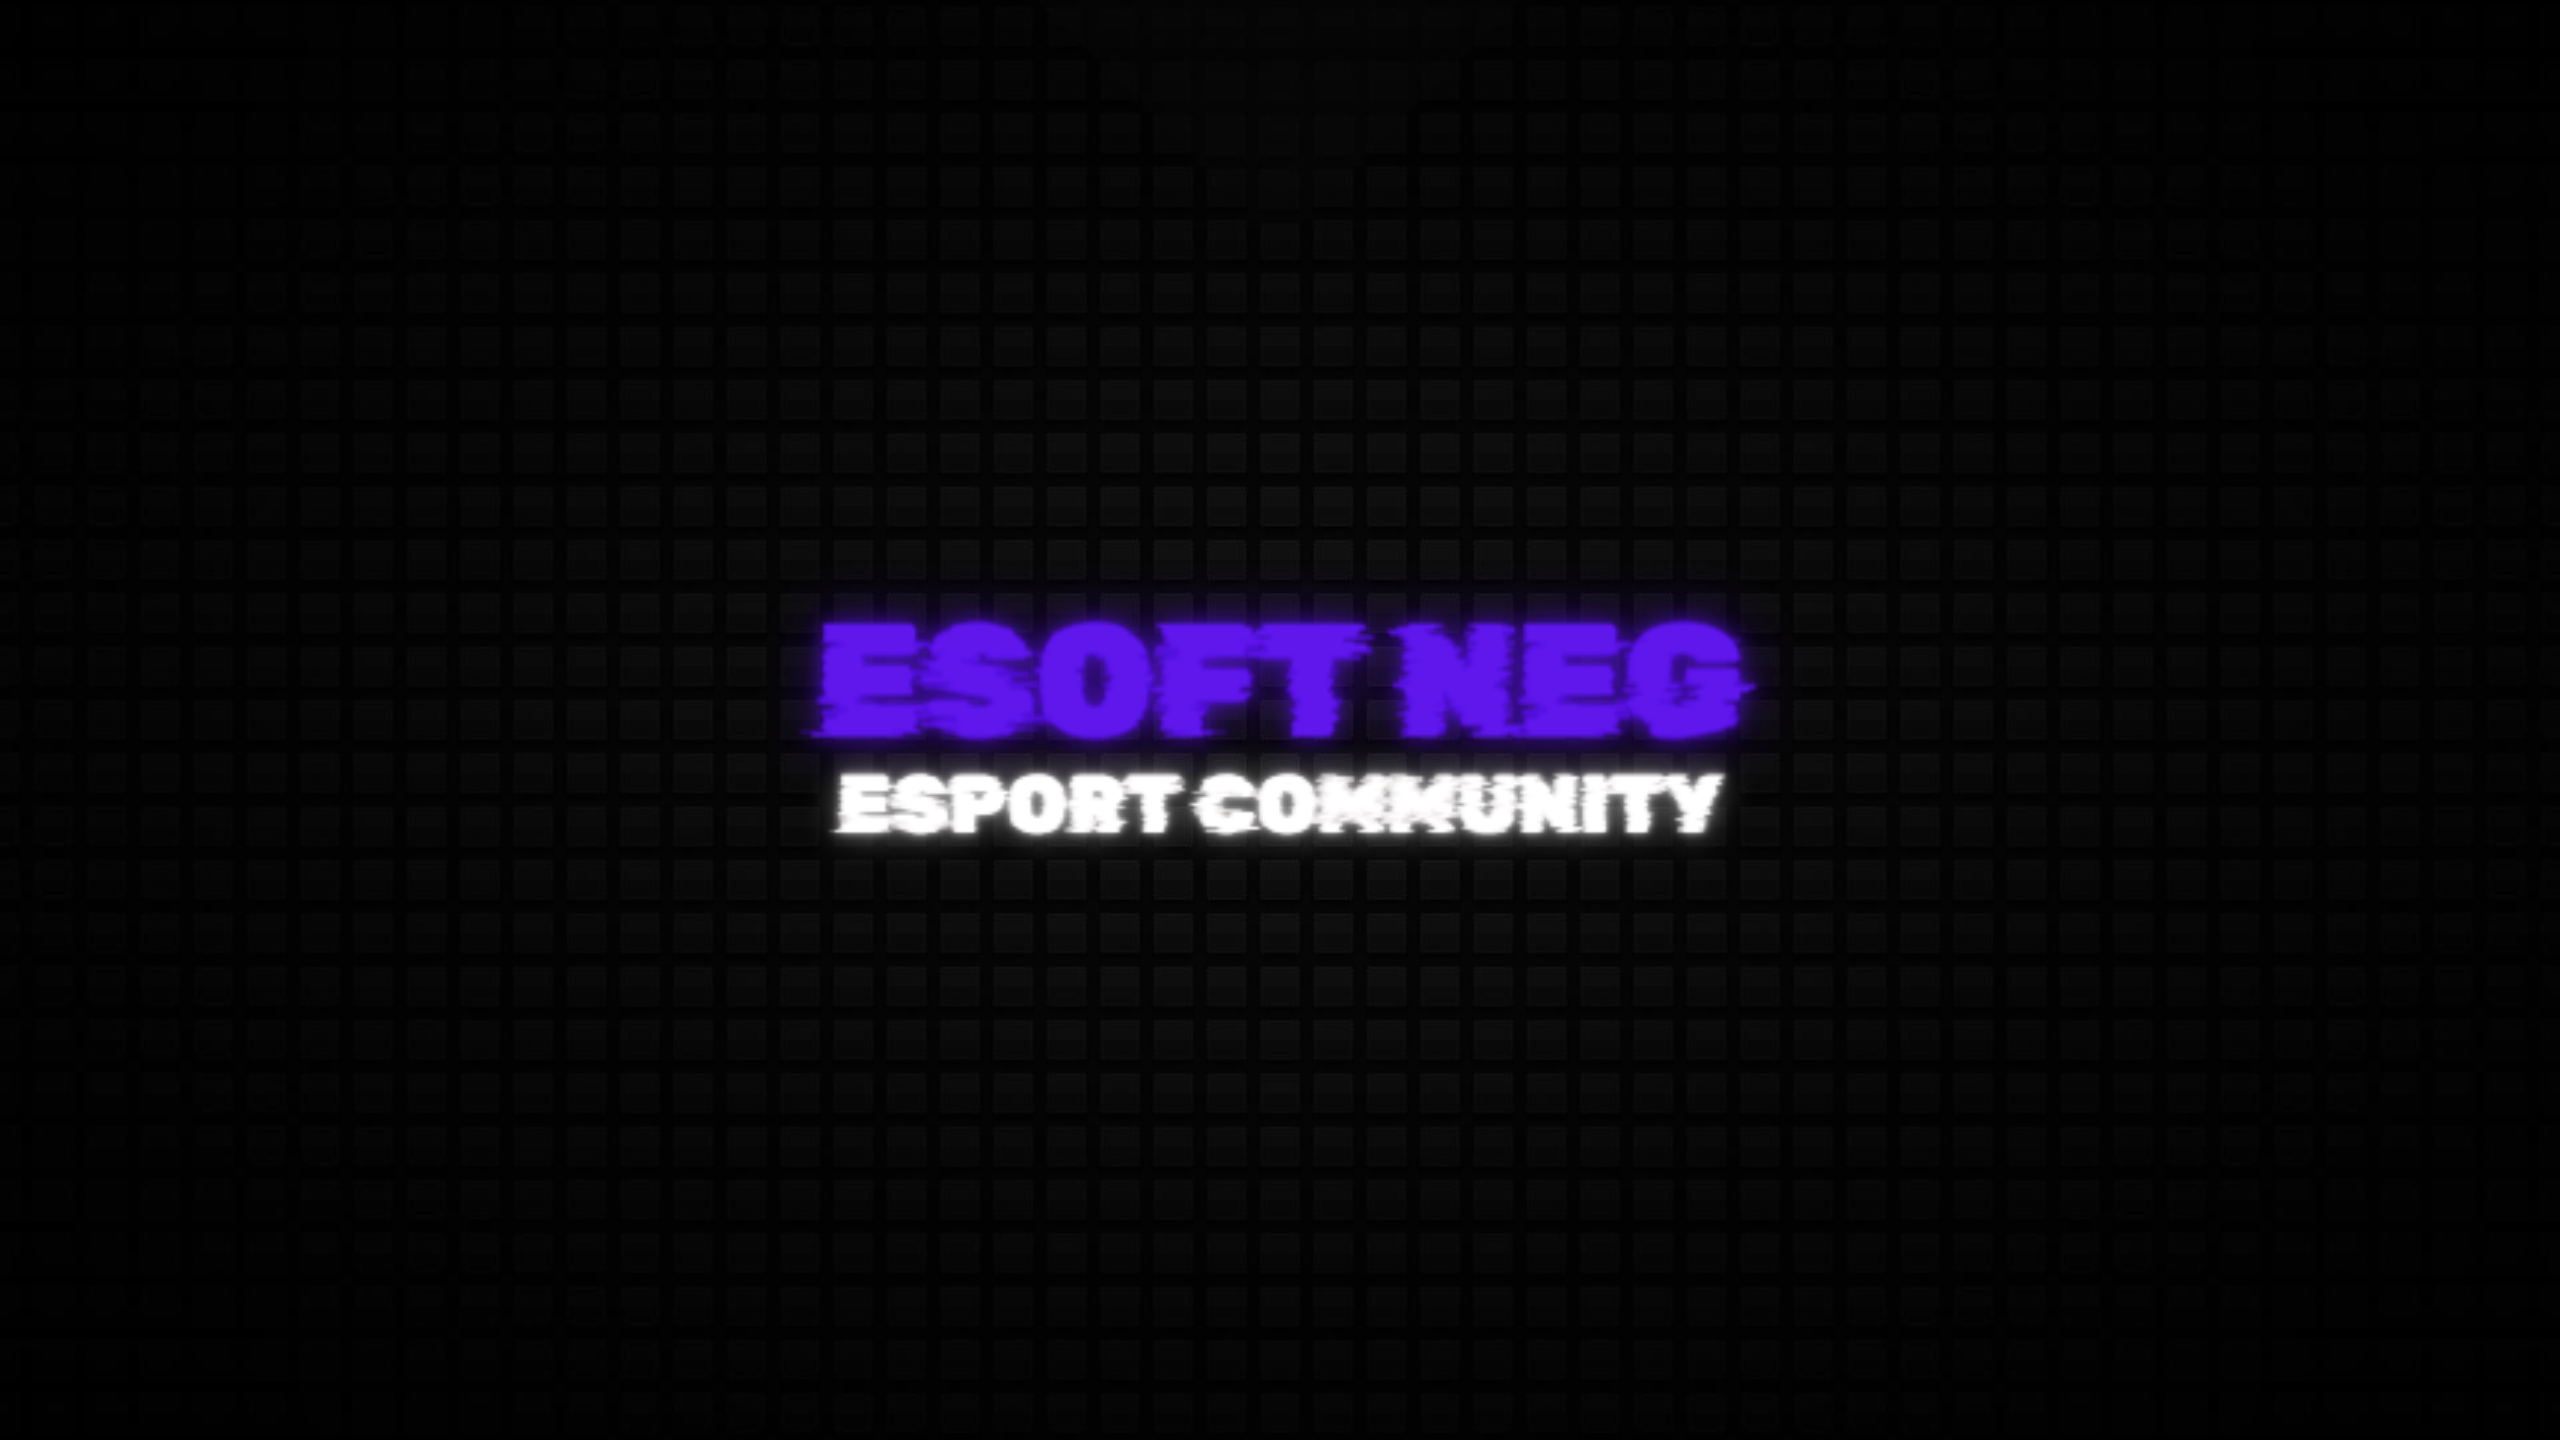 Esoft Neg Esport Community